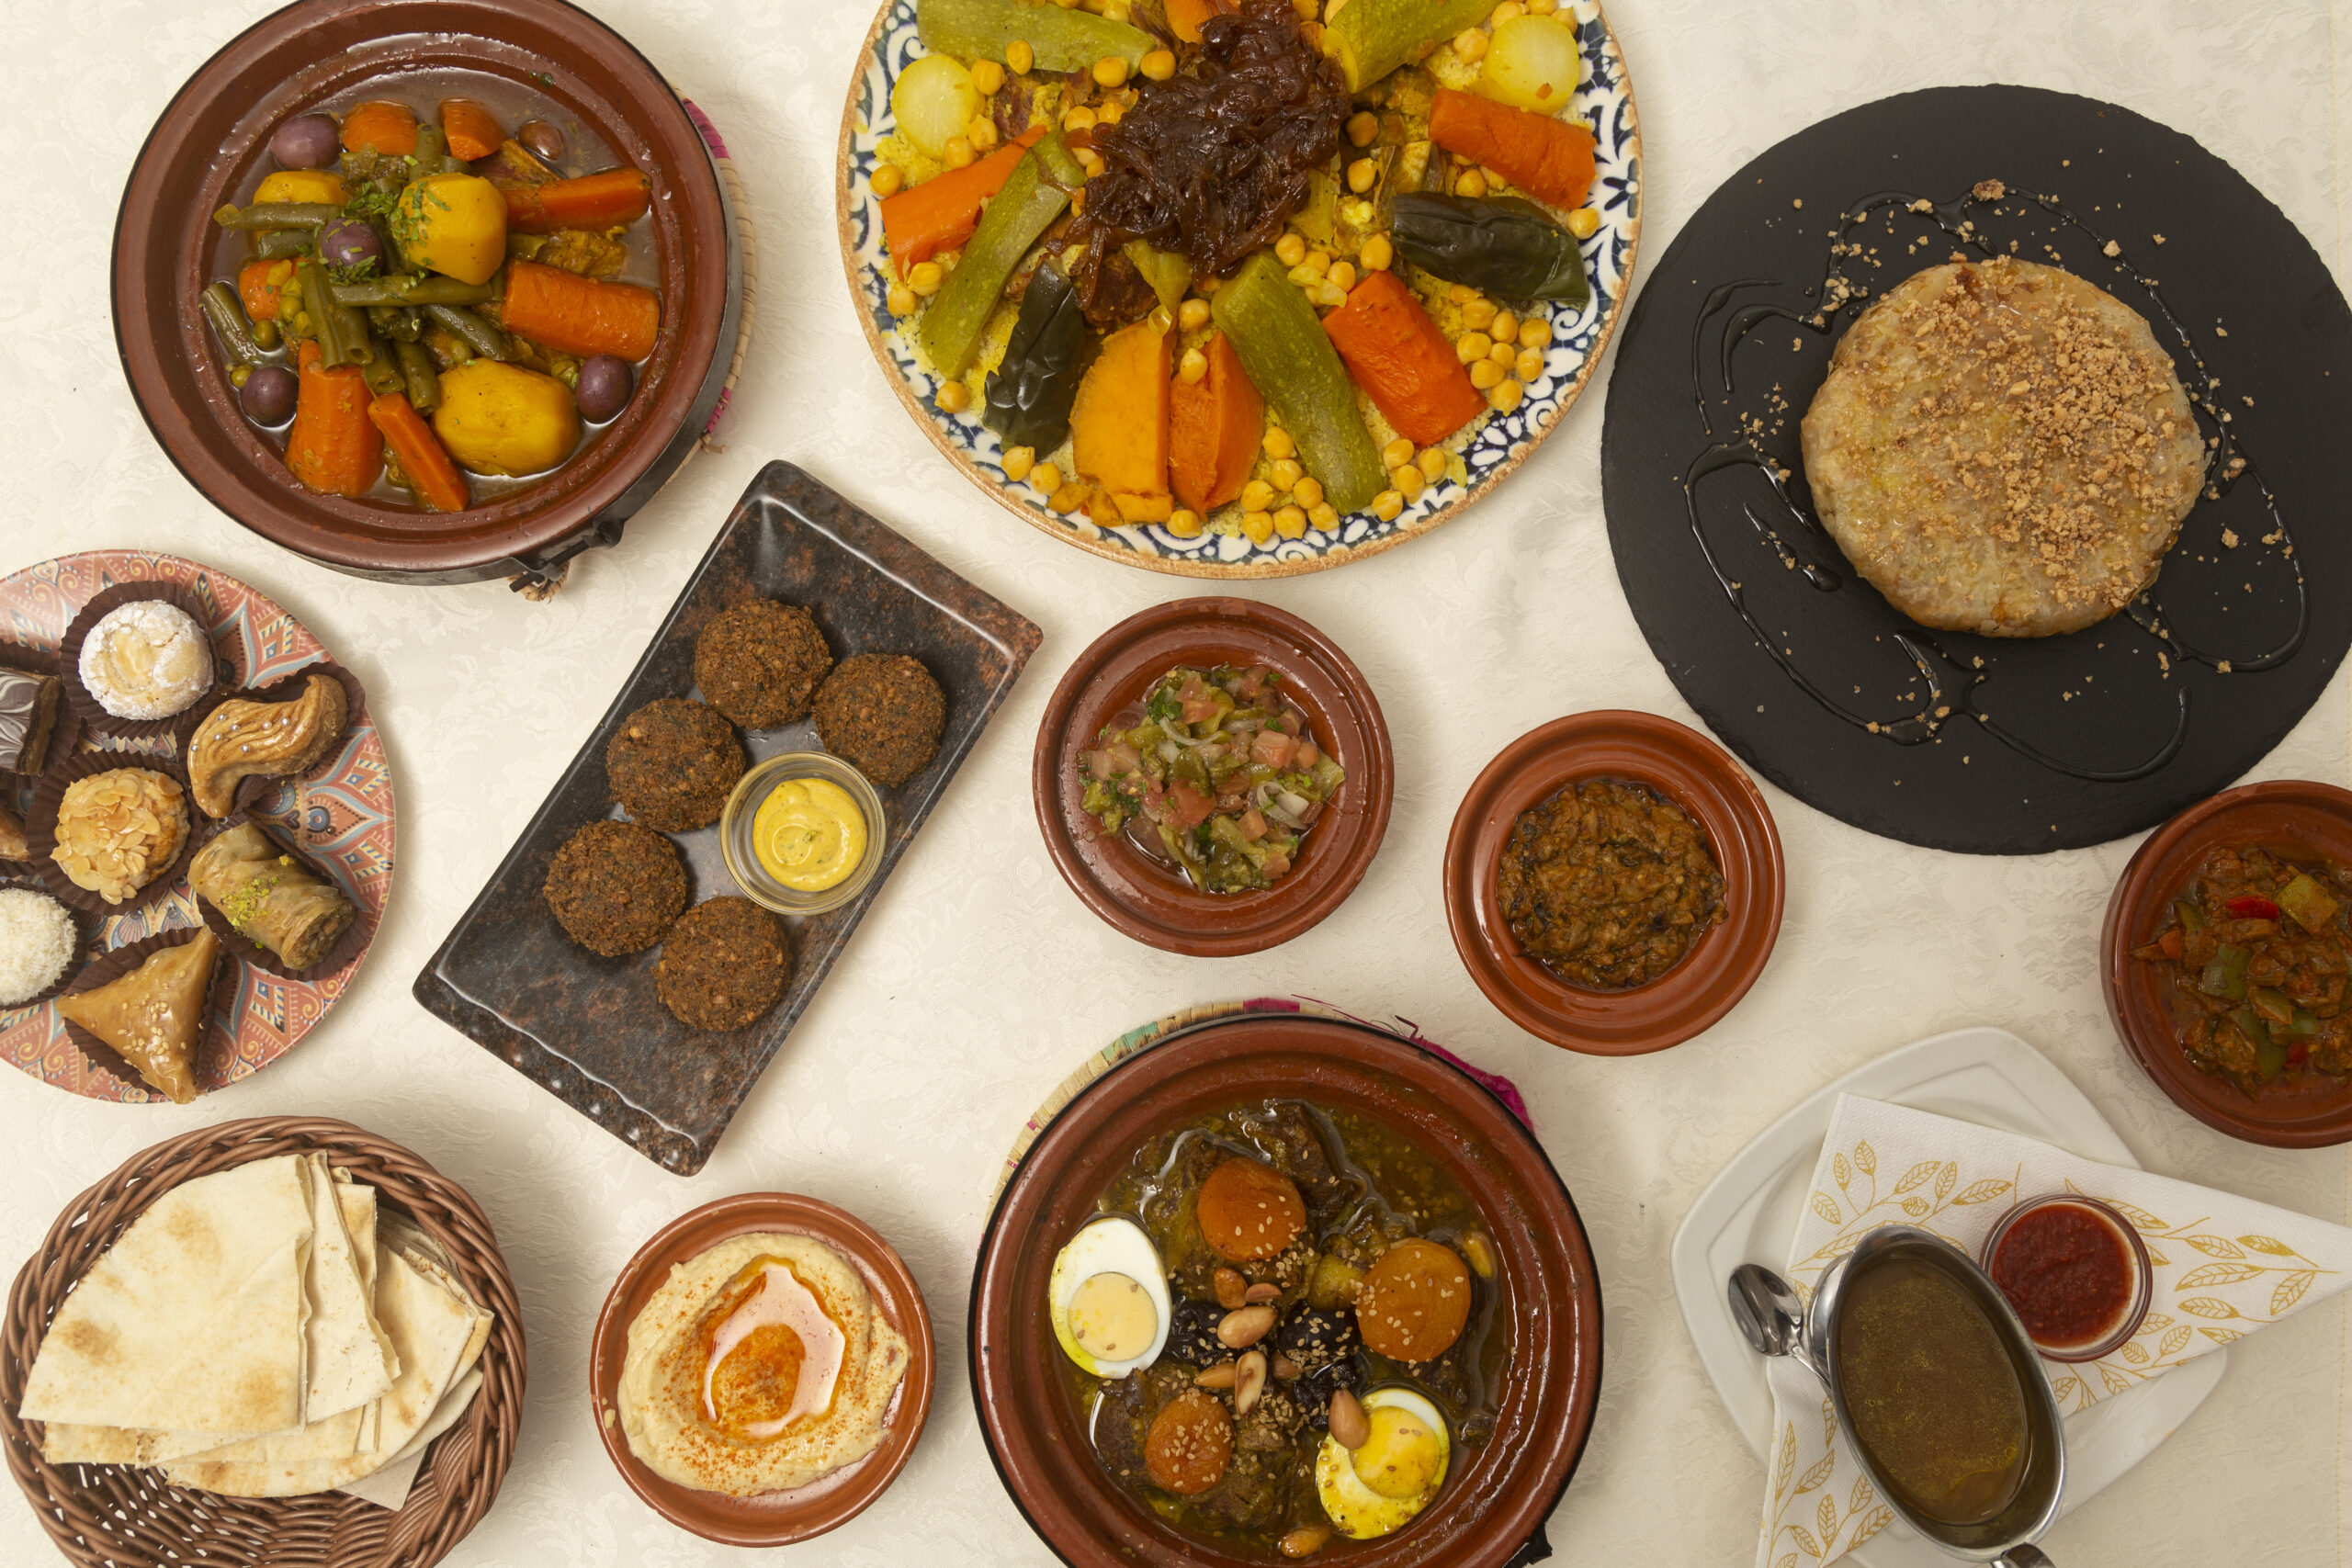 Moroccan Cuisine & Food Experiences